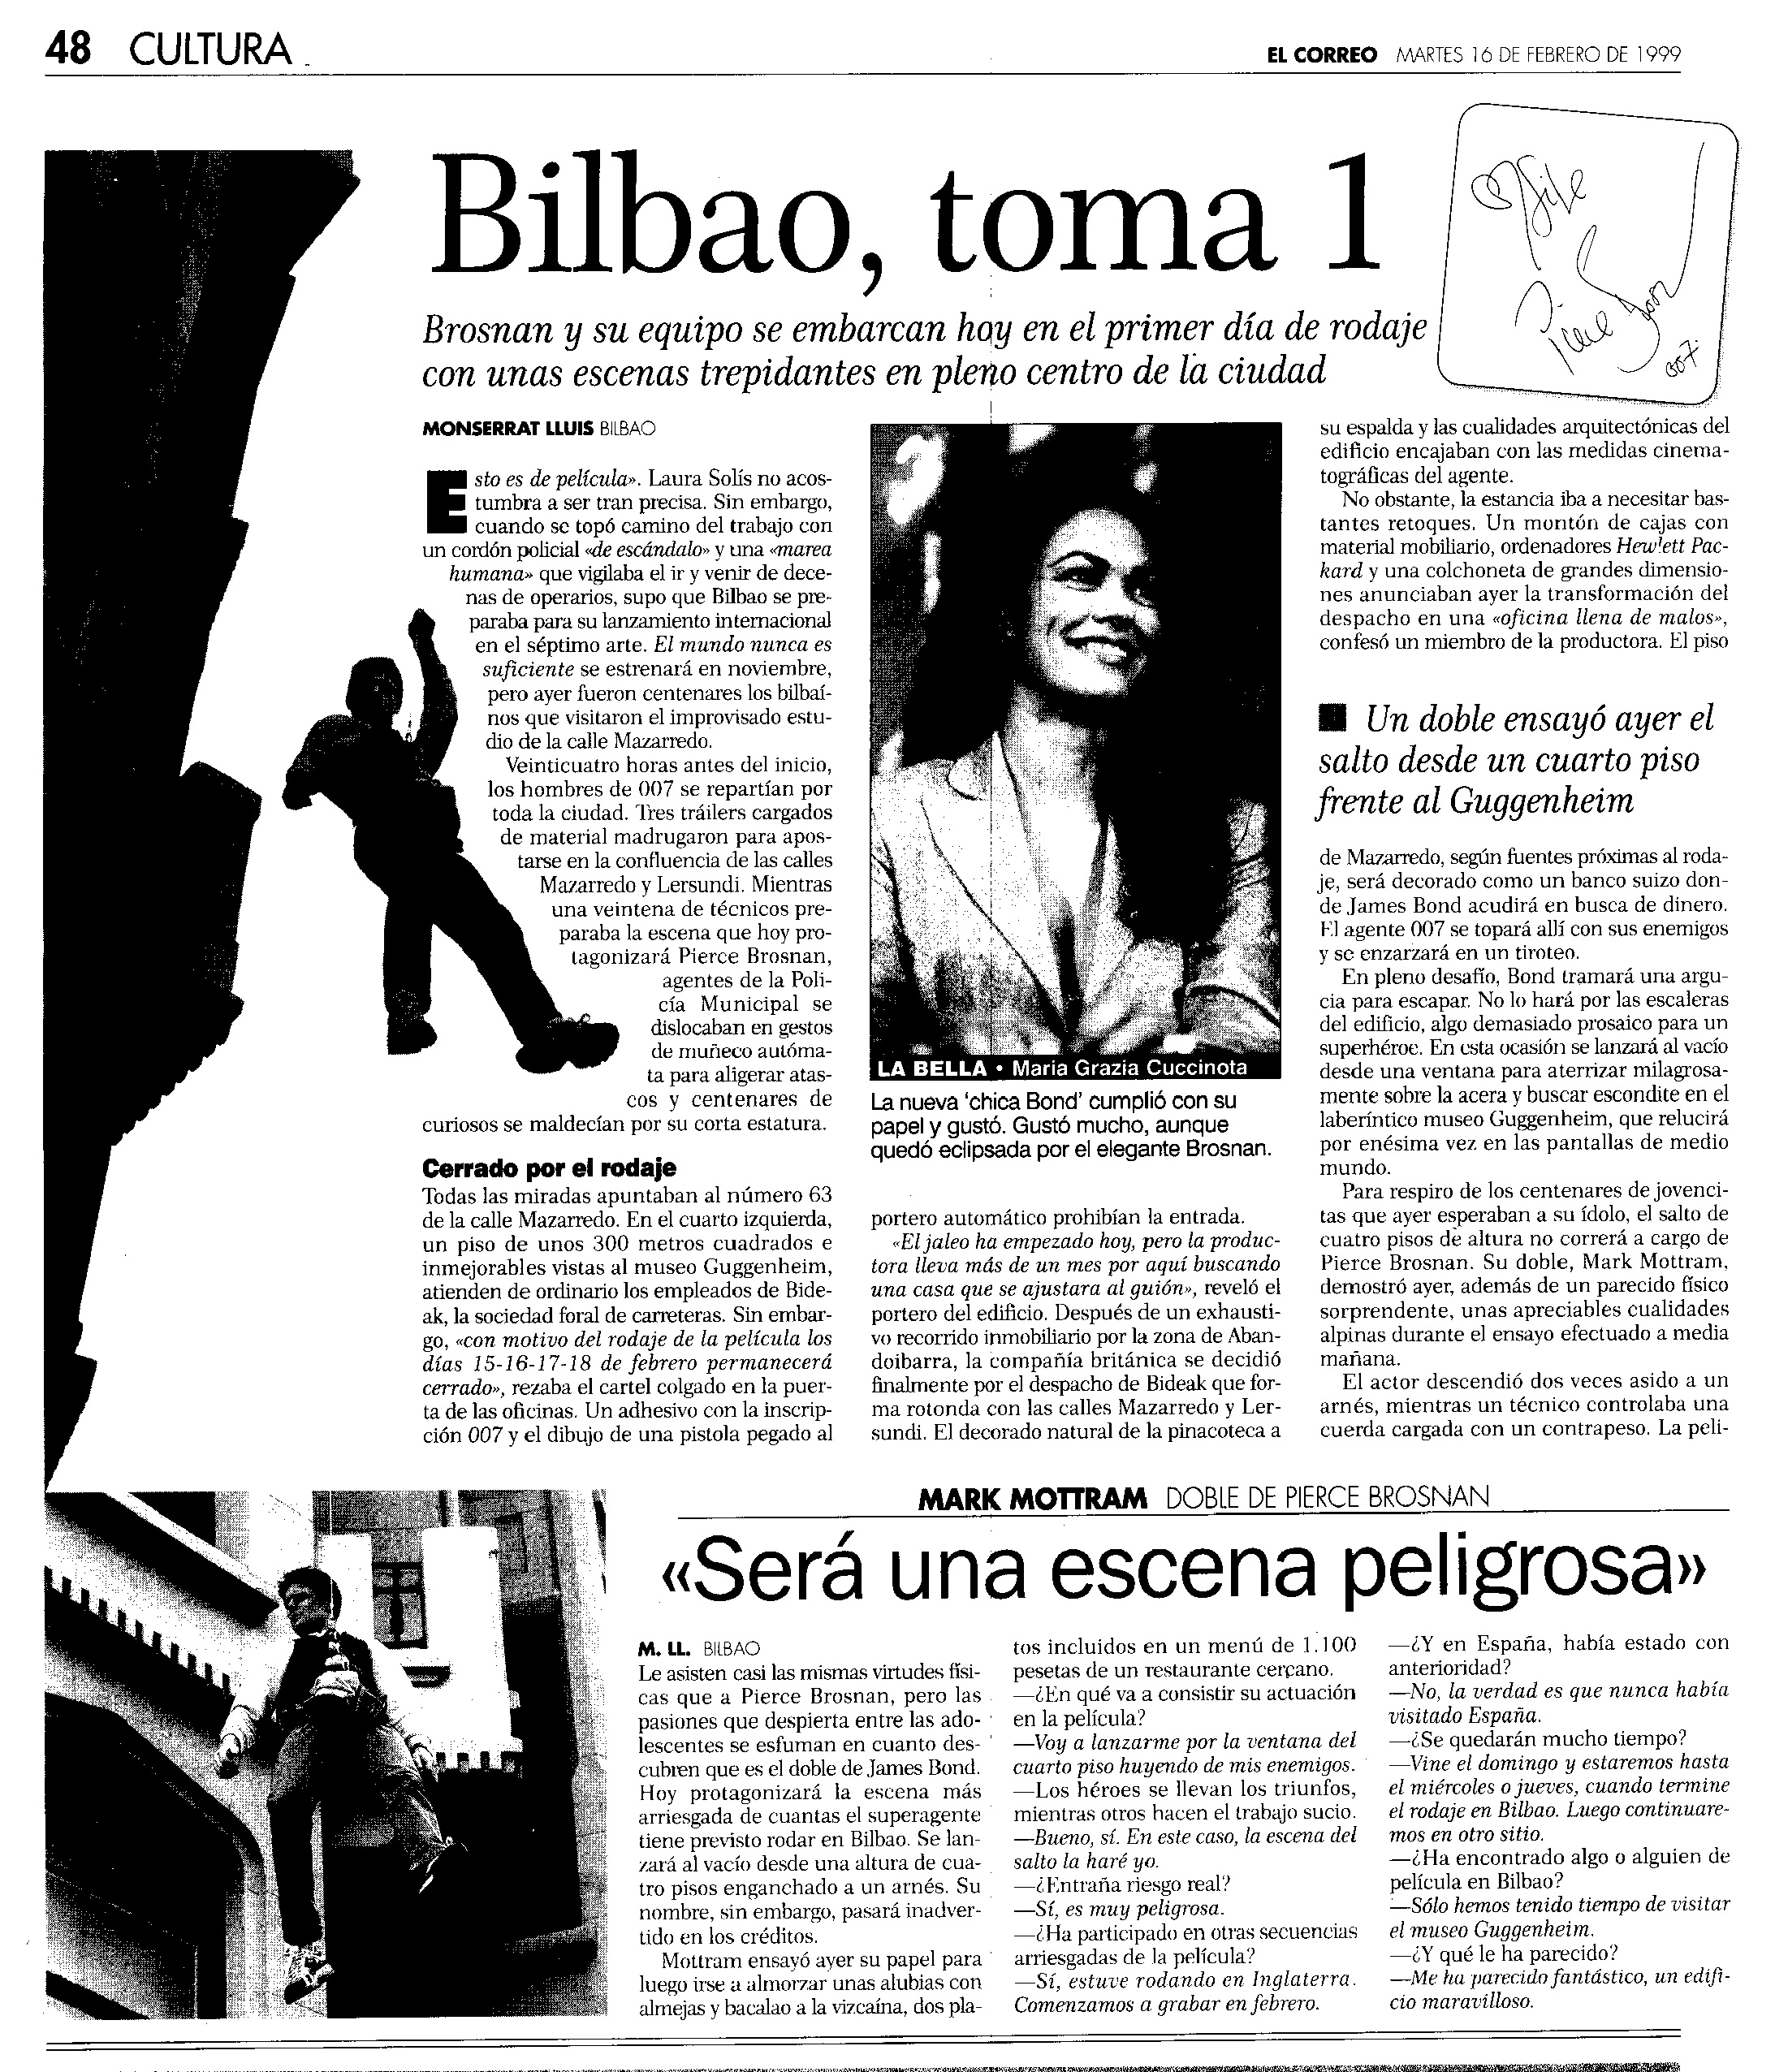 19 1999 02 16 El Correo Alava 48 Rodaje Bilbao